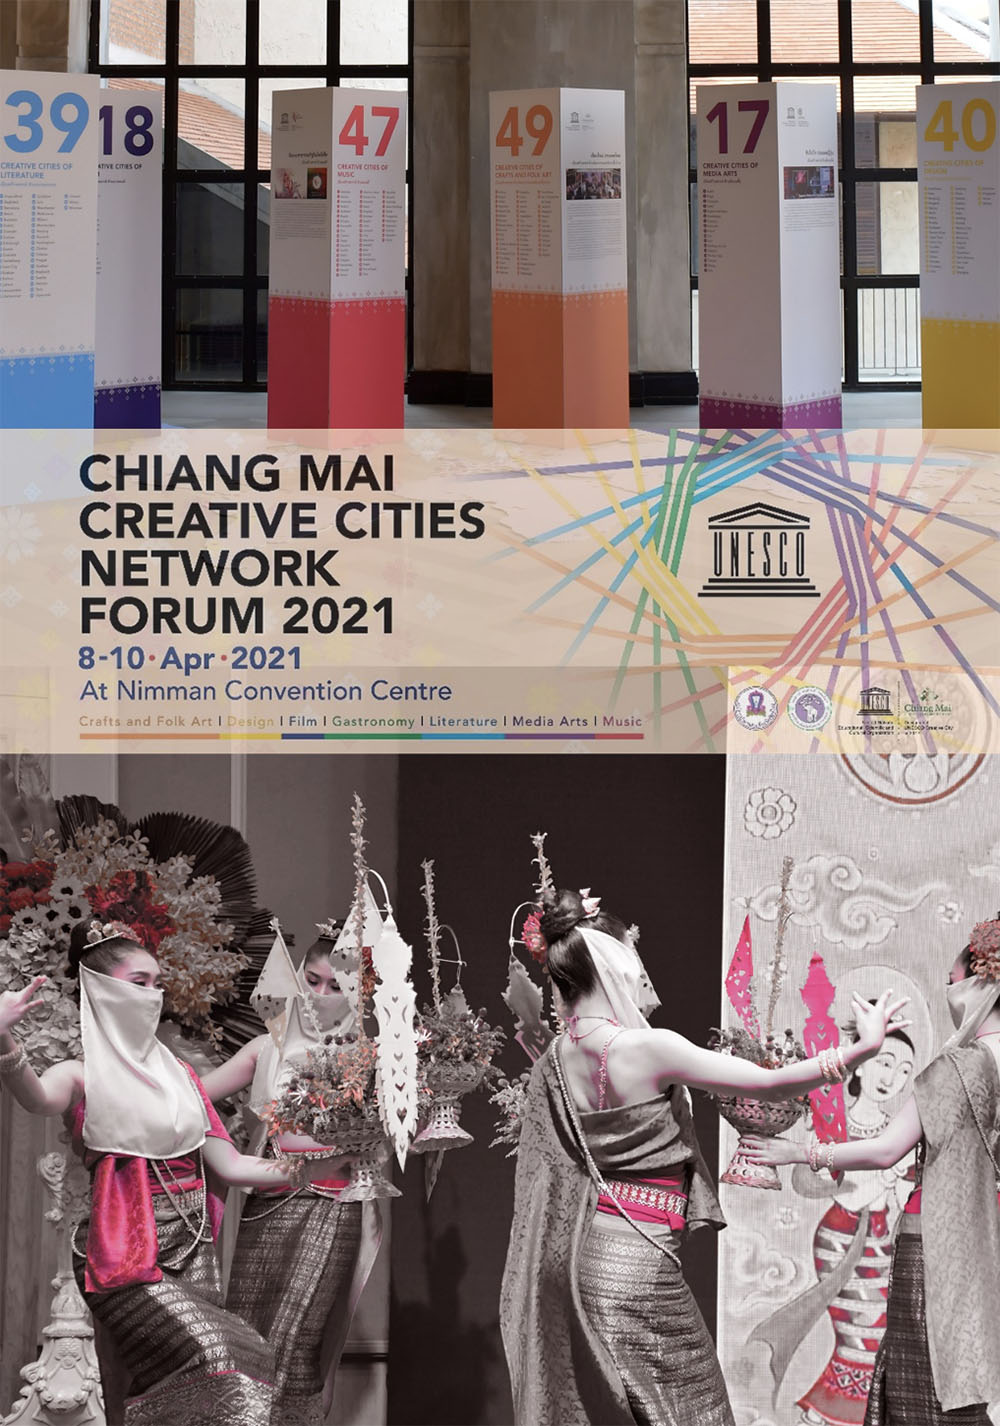 CHIANG MAI CITY OF CRAFTS AND FOLK ART